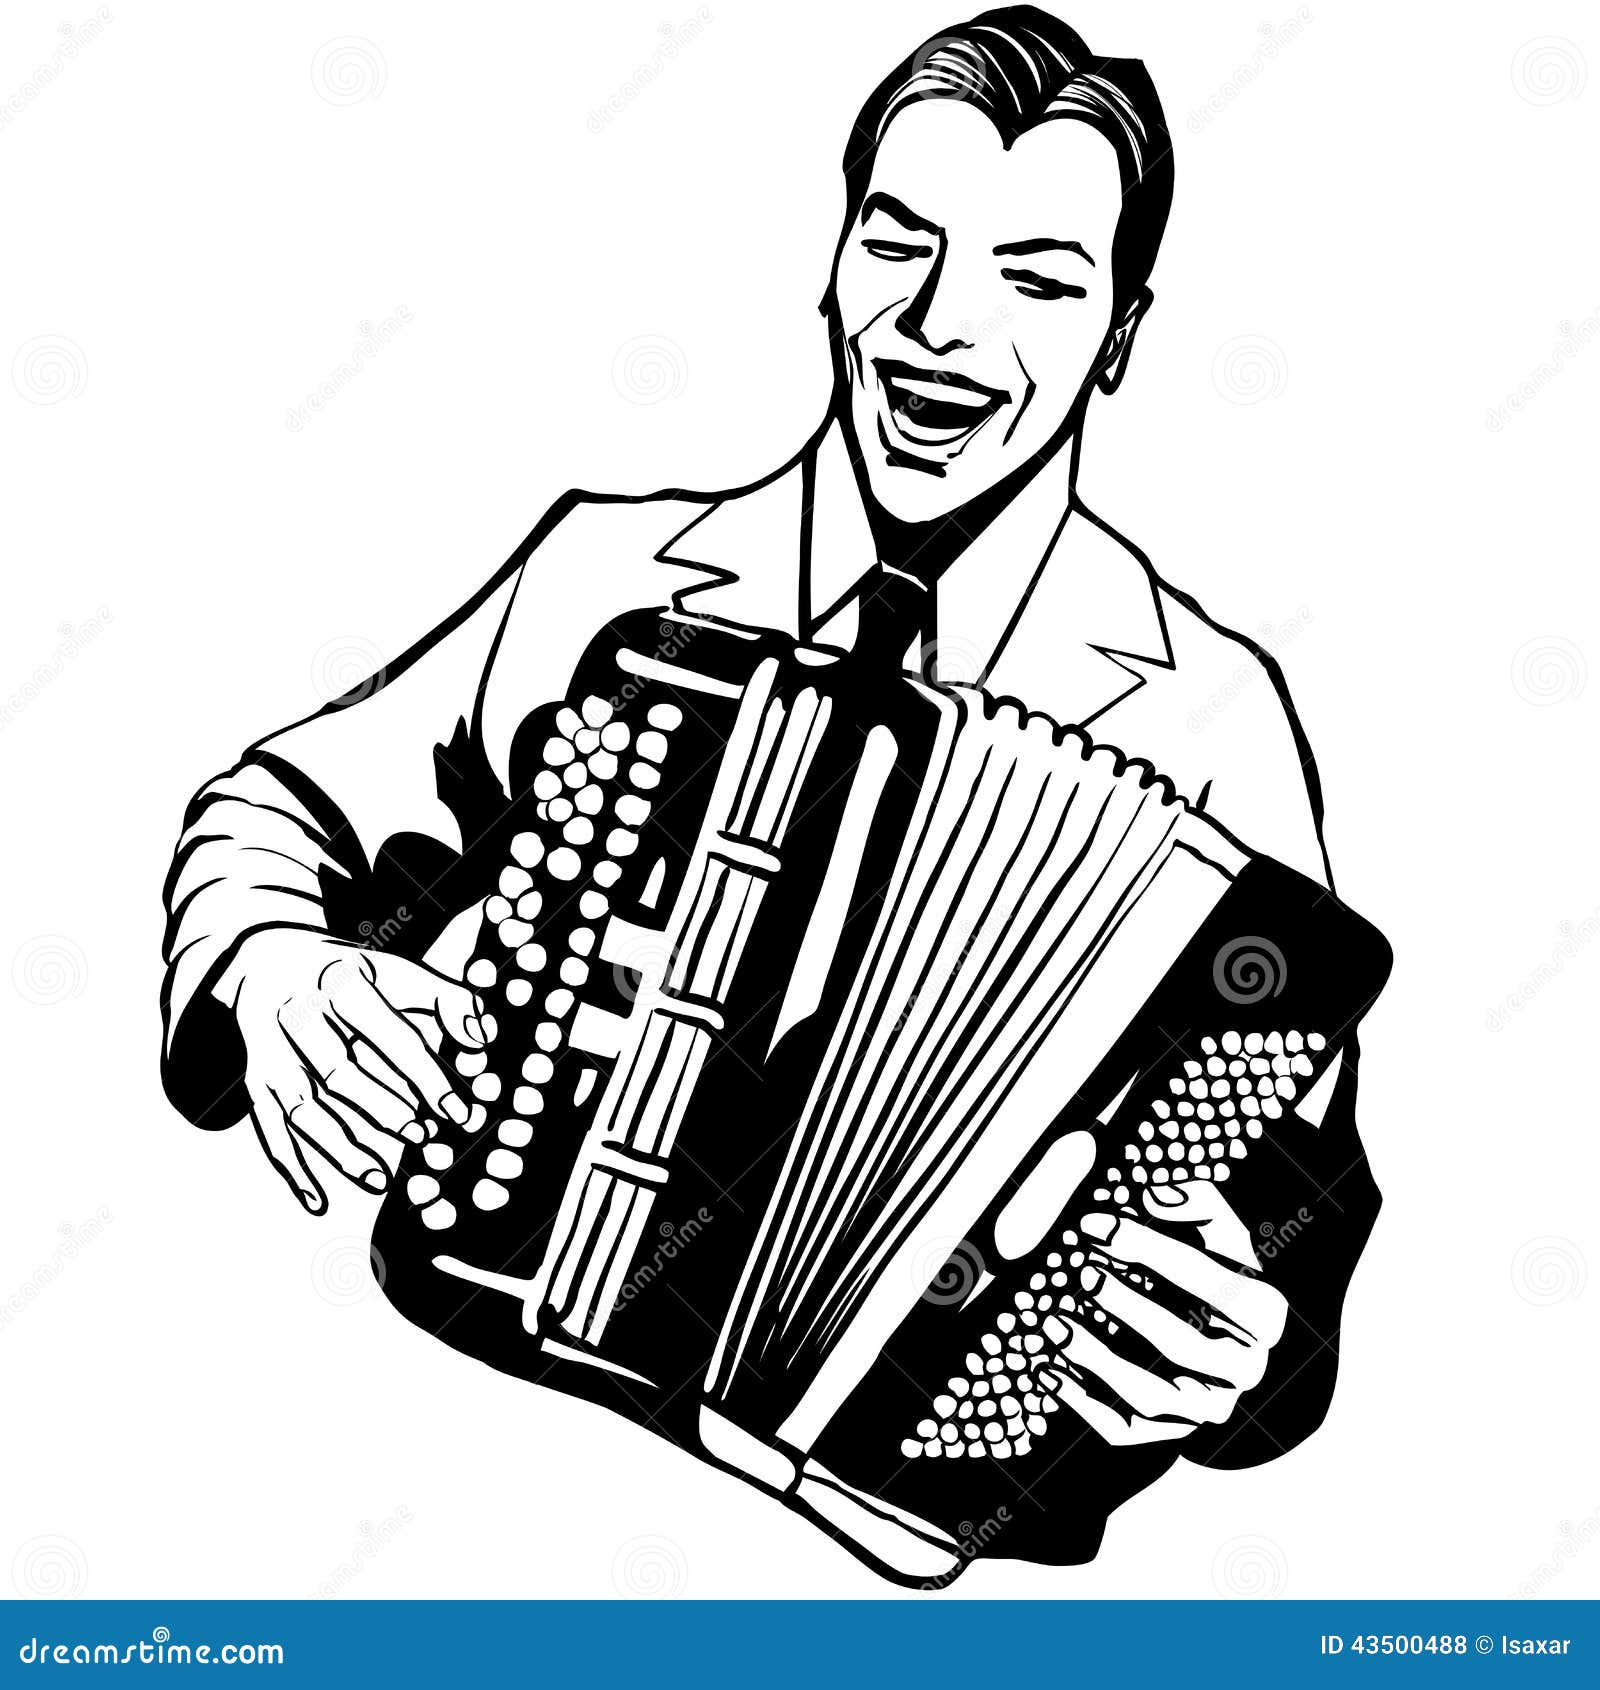 Accordion player stock vector. Illustration of harmony - 43500488